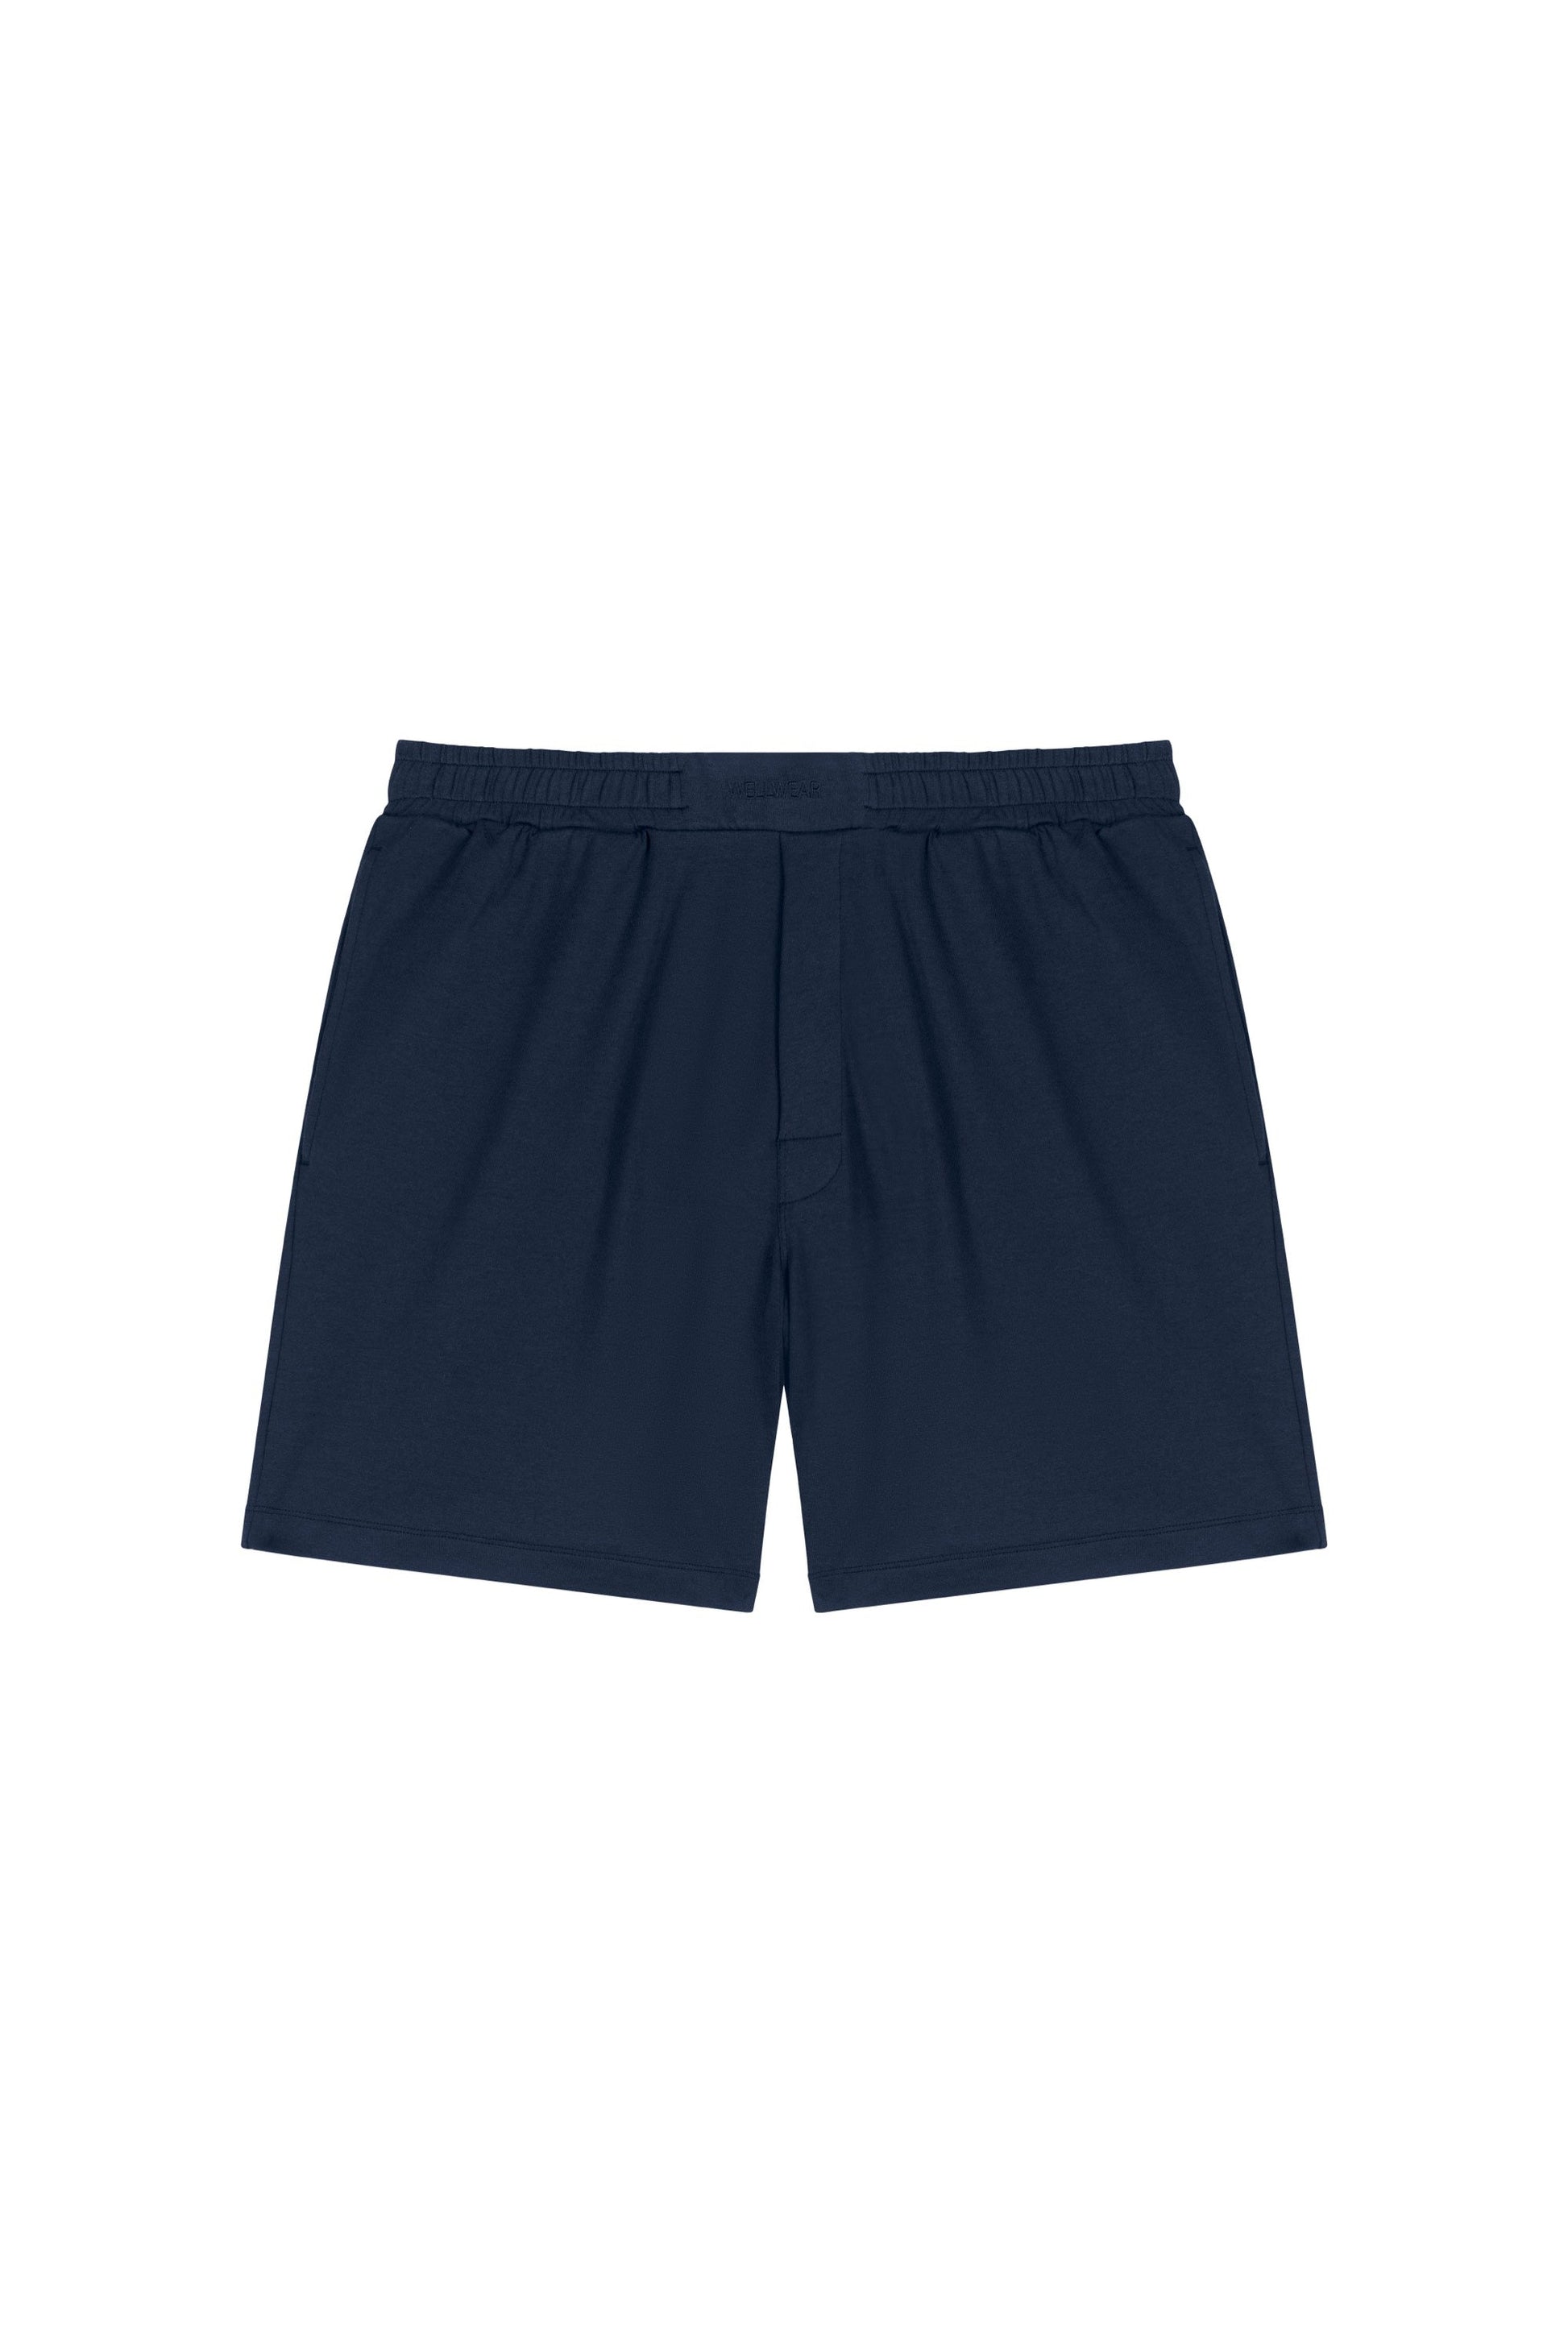 Premium Pyjama Shorts - Navy | David Gandy Wellwear